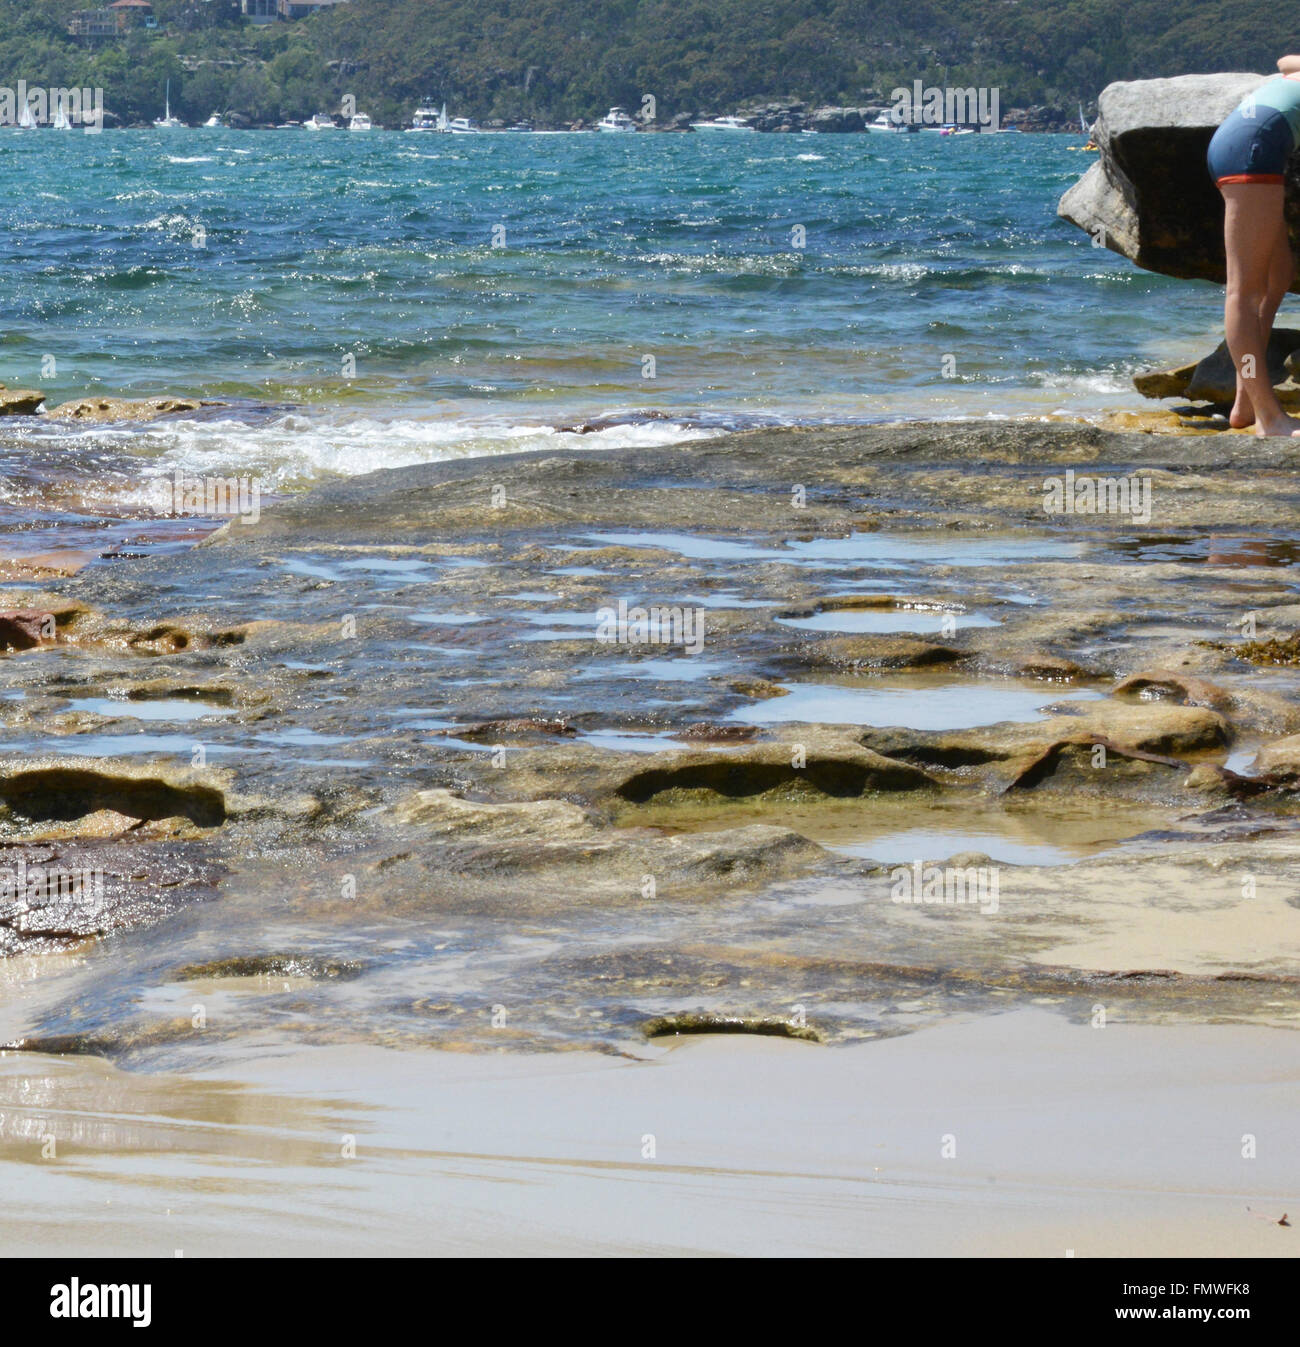 Beach scene, girl on rocks, Sydney Australia Stock Photo